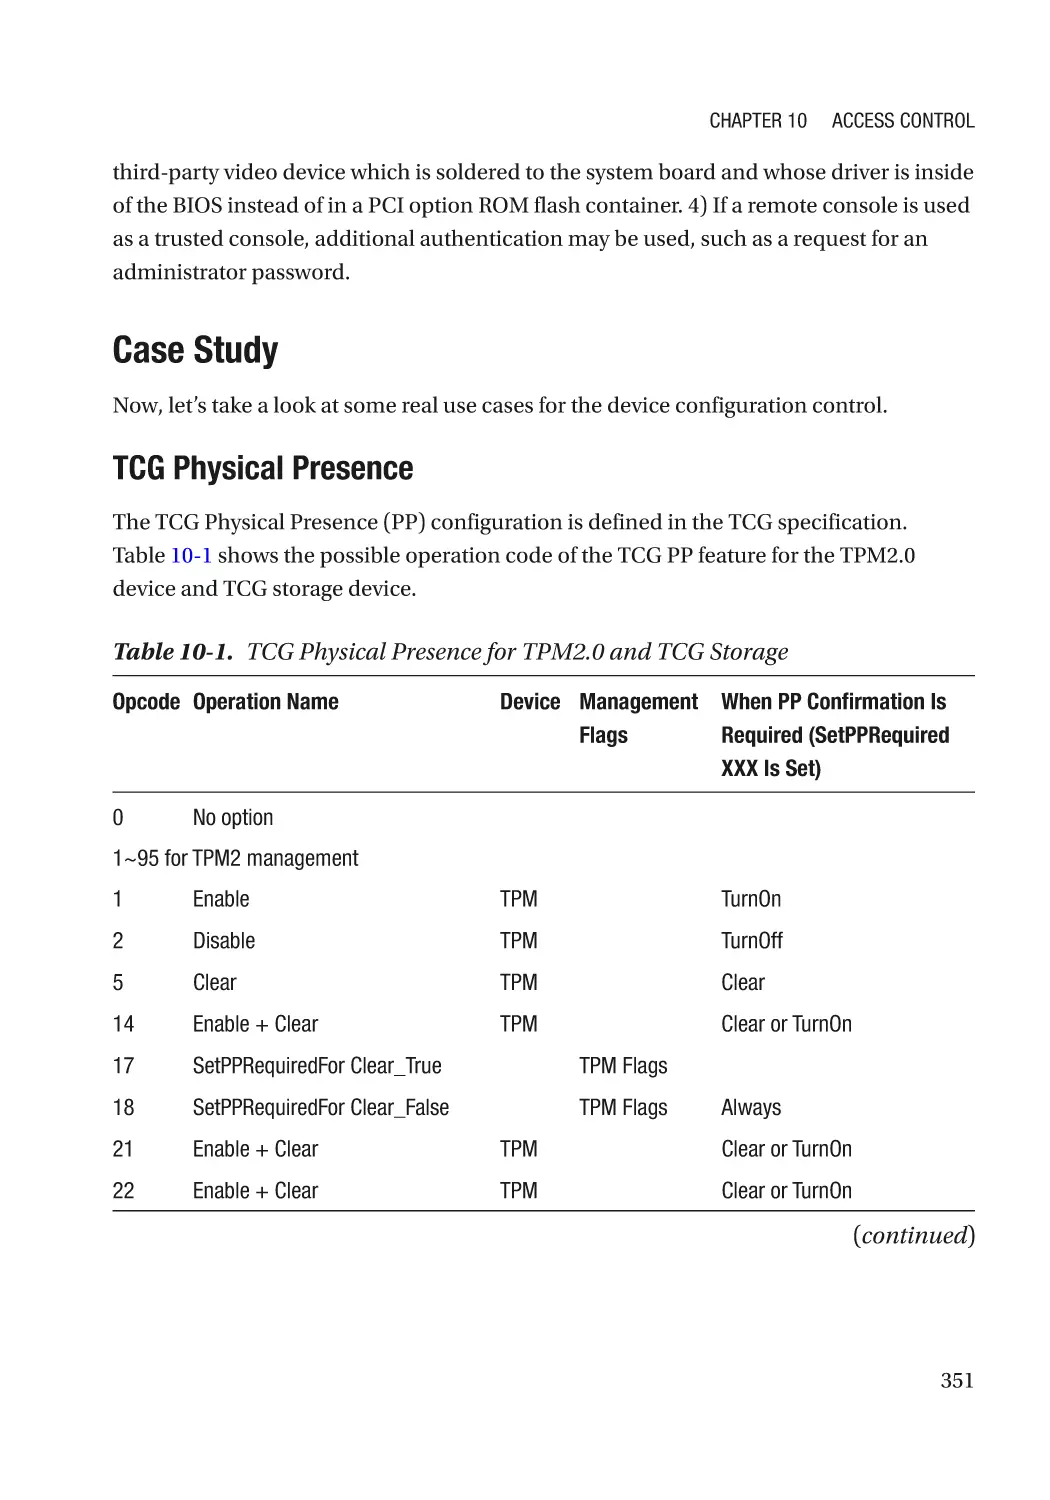 Case Study
TCG Physical Presence